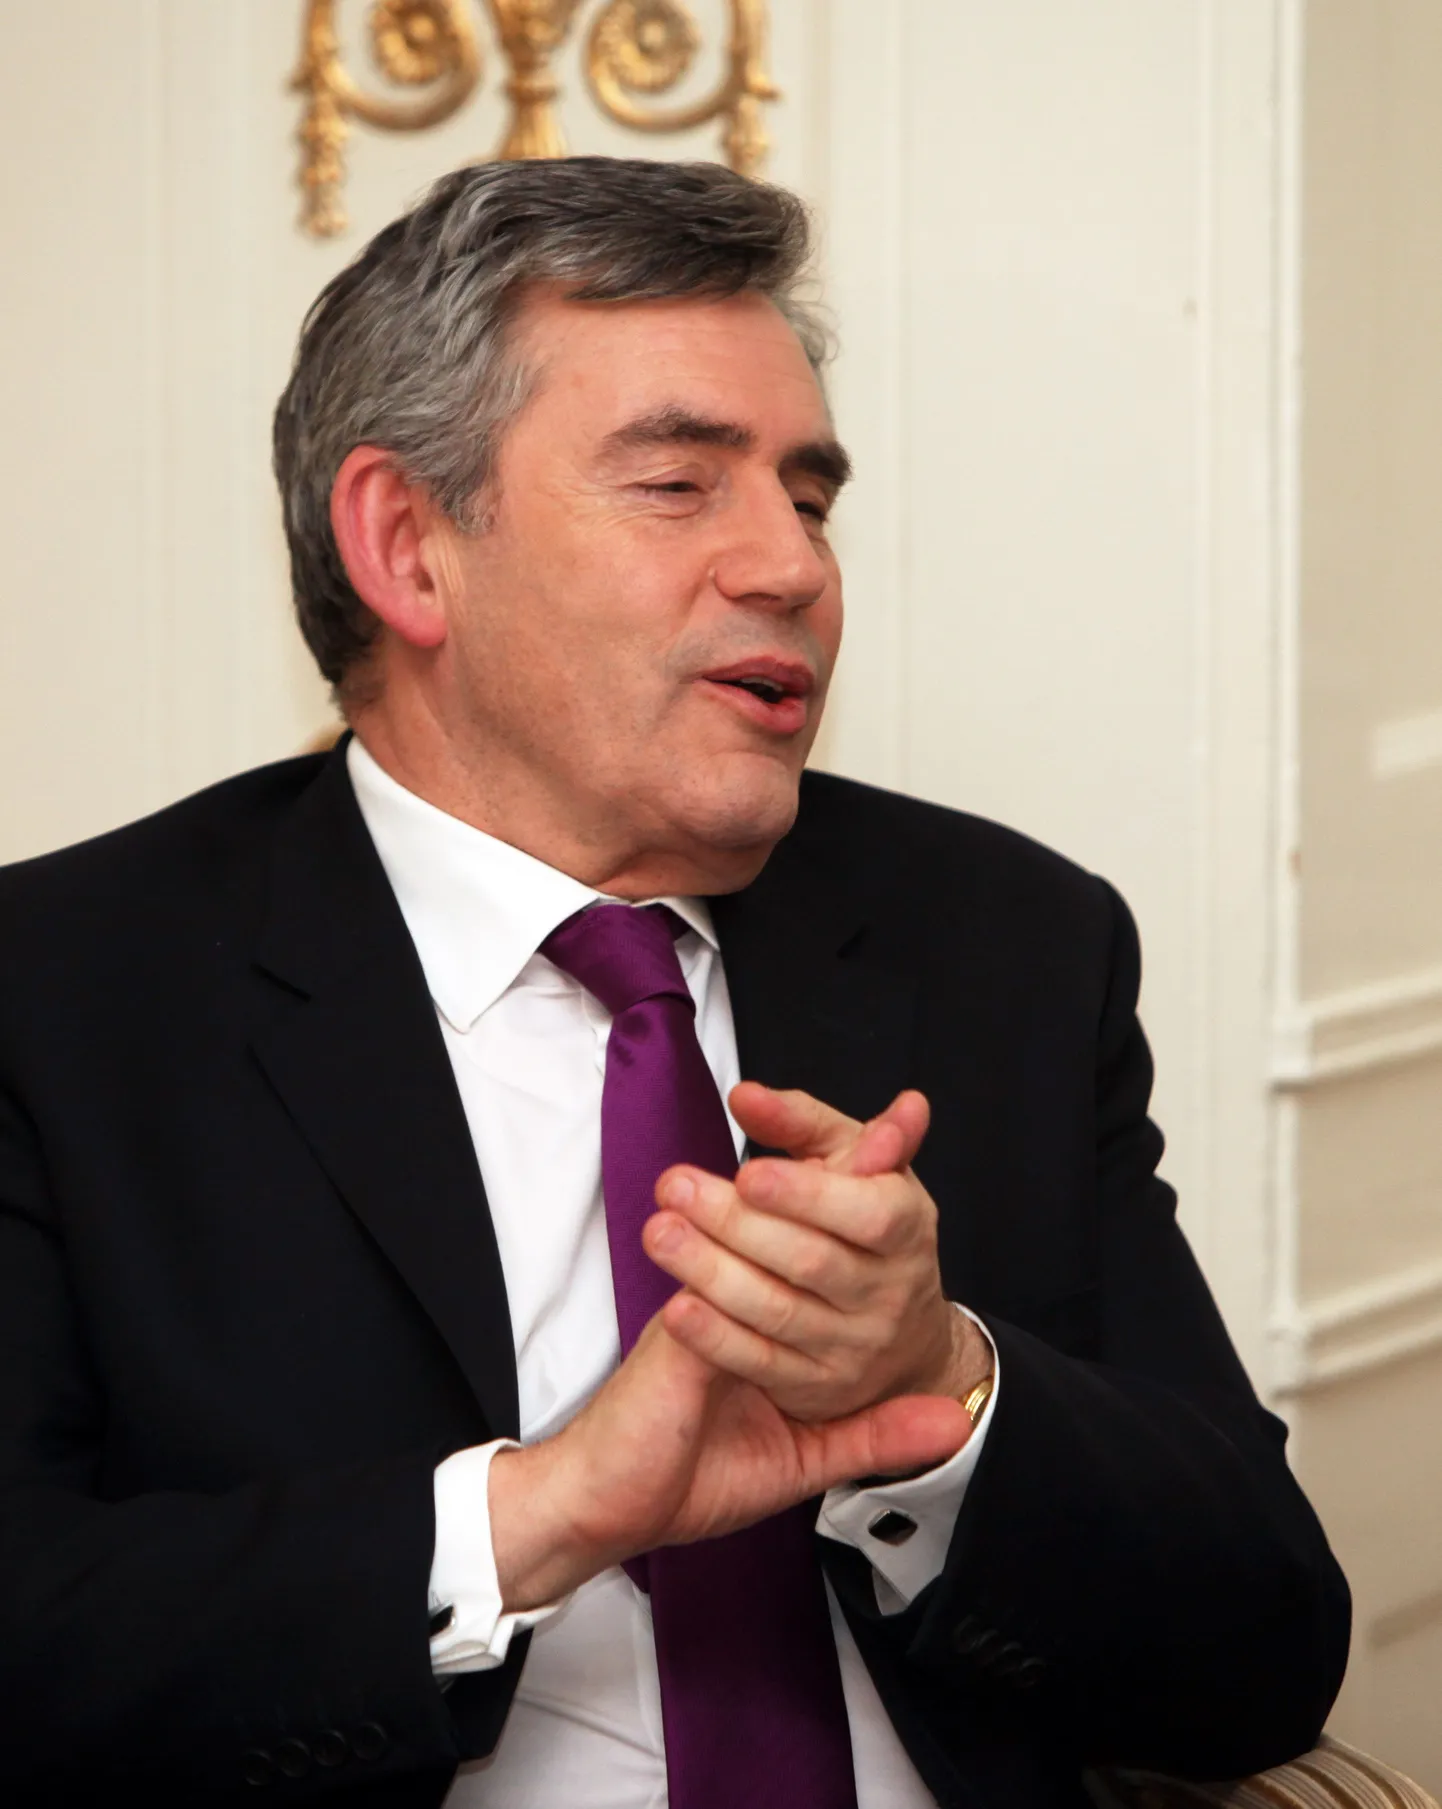 Briti peaminister Gordon Brown